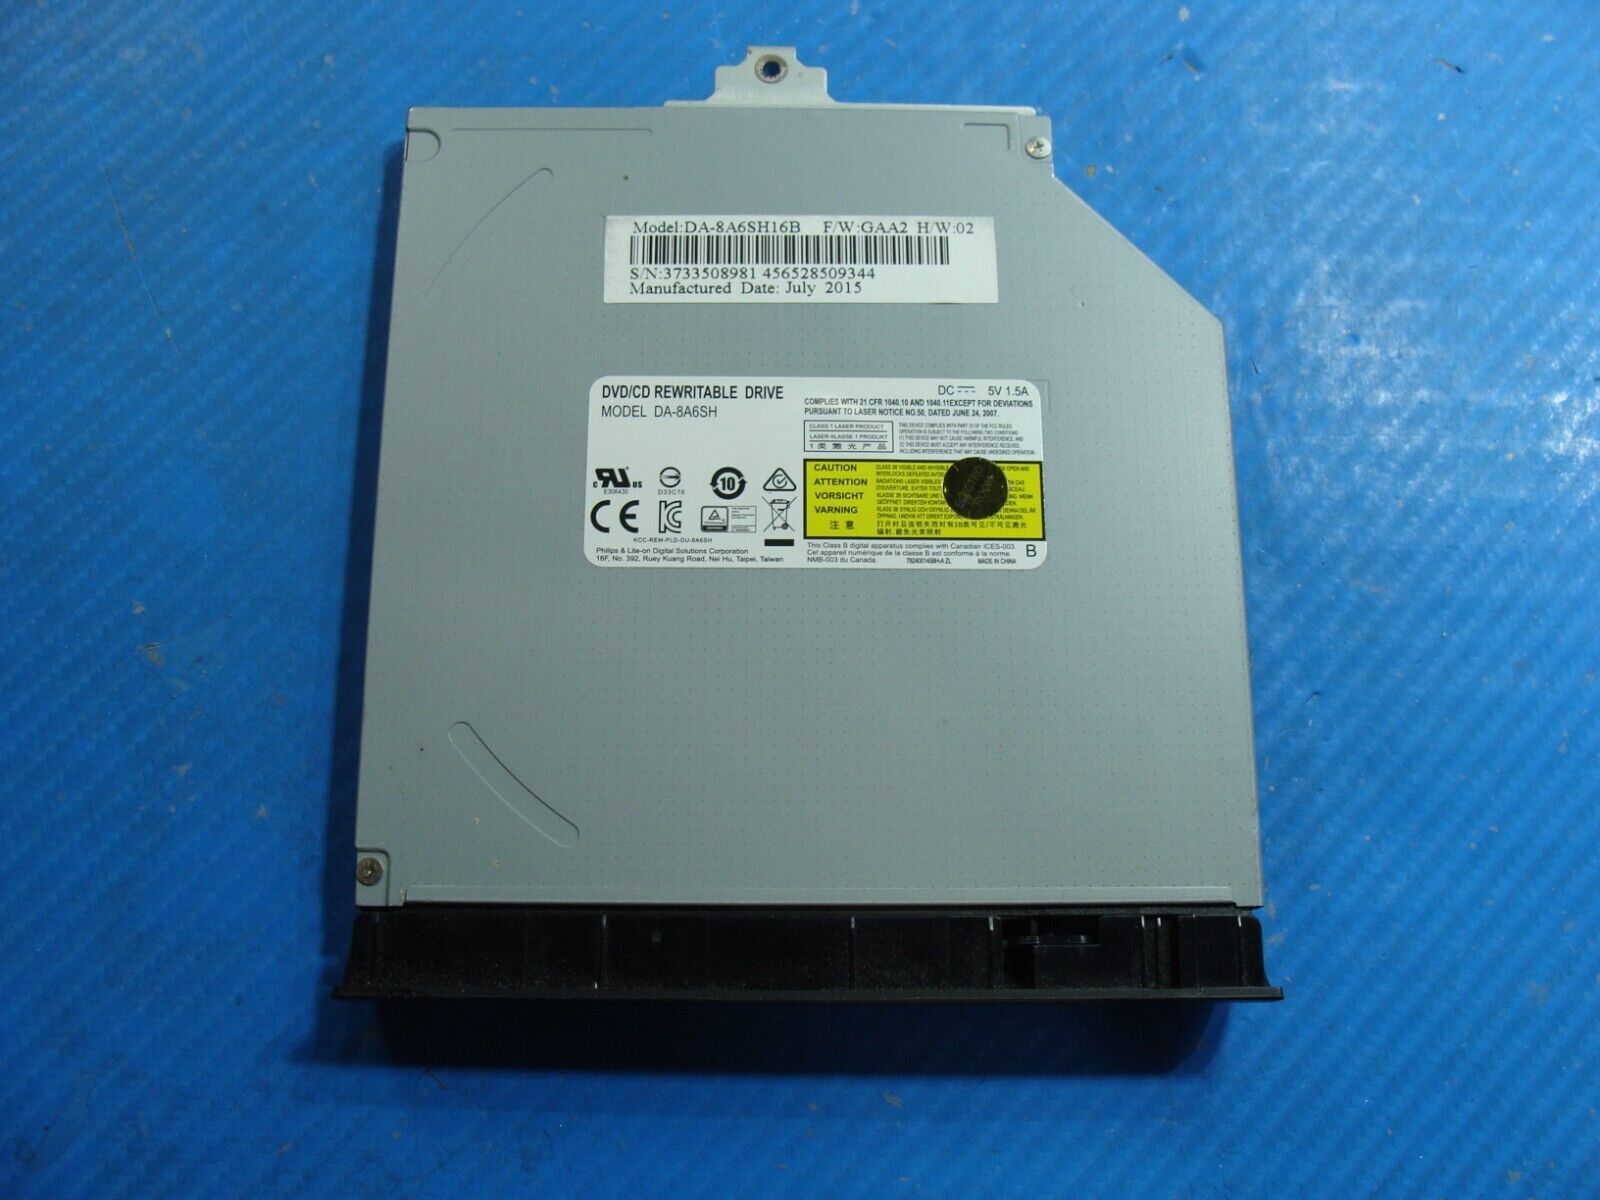 Asus ROG 15.6” GL552VW-DH71 Genuine Laptop DVD/CD-RW Burner Drive DA-8A6SH